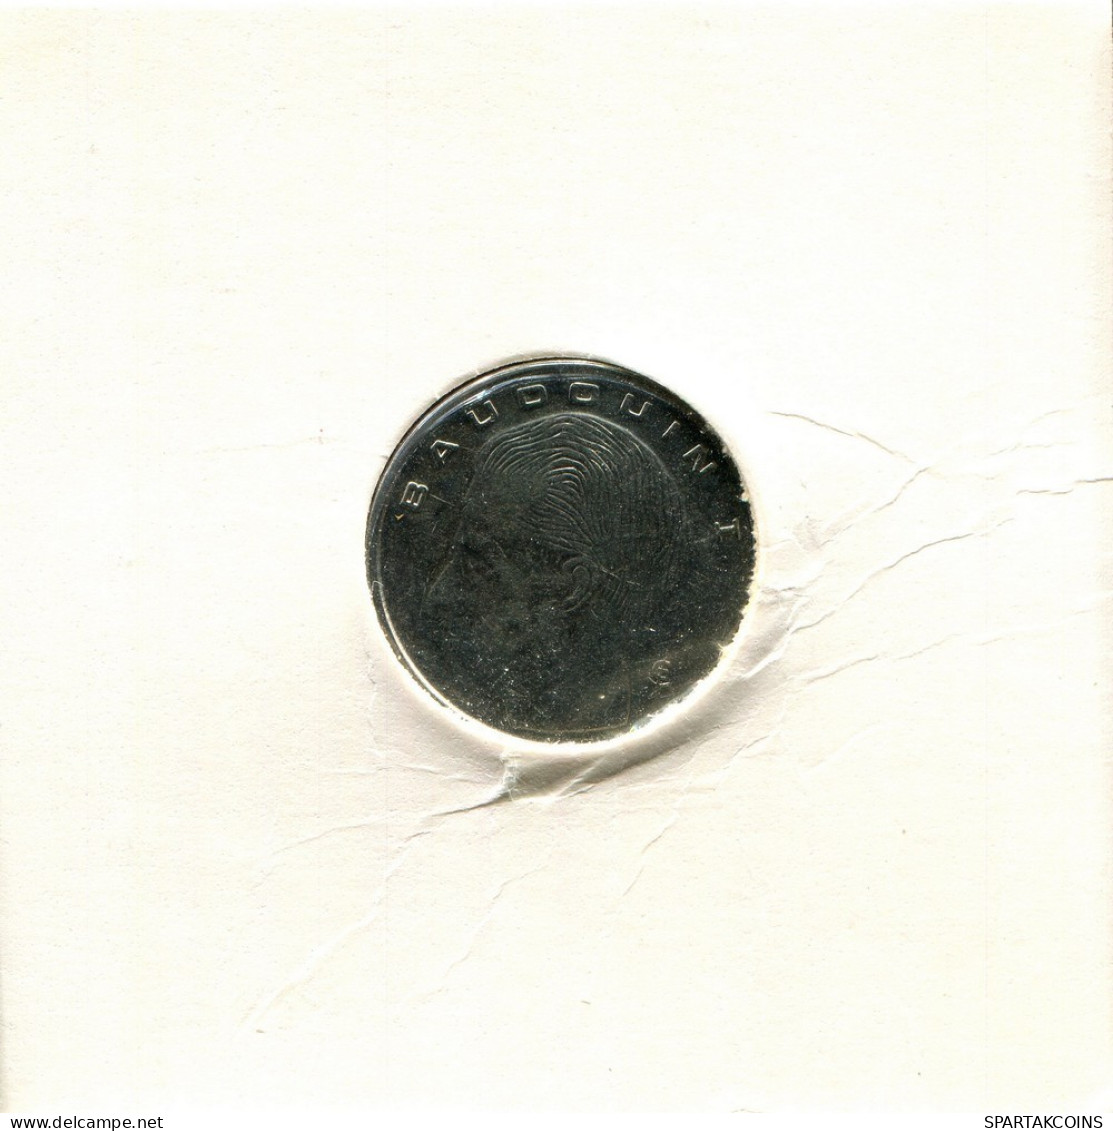 1 FRANC 1991 FRENCH Text BELGIUM Coin #AU688.U.A - 1 Franc